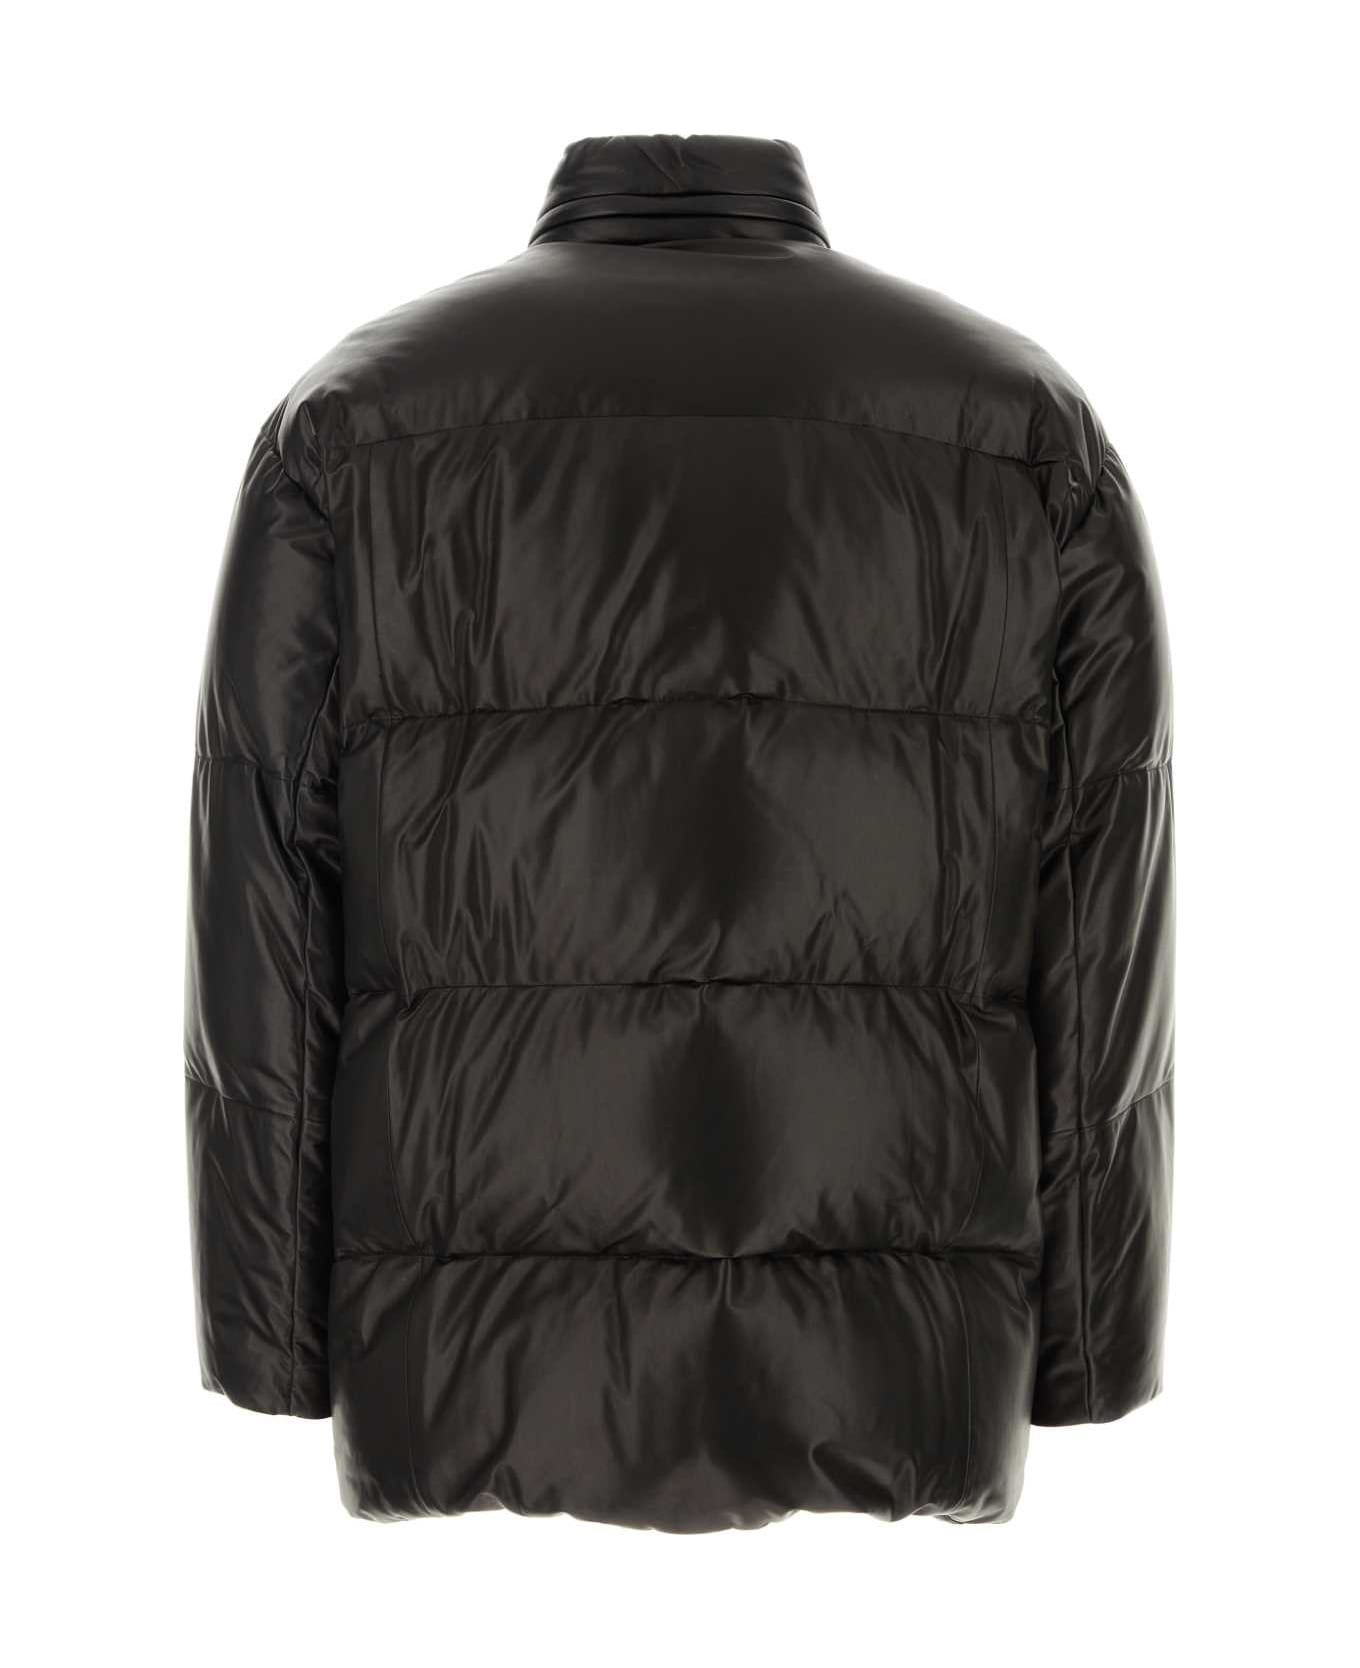 Prada Black Nappa Leather Down Jacket - NERO